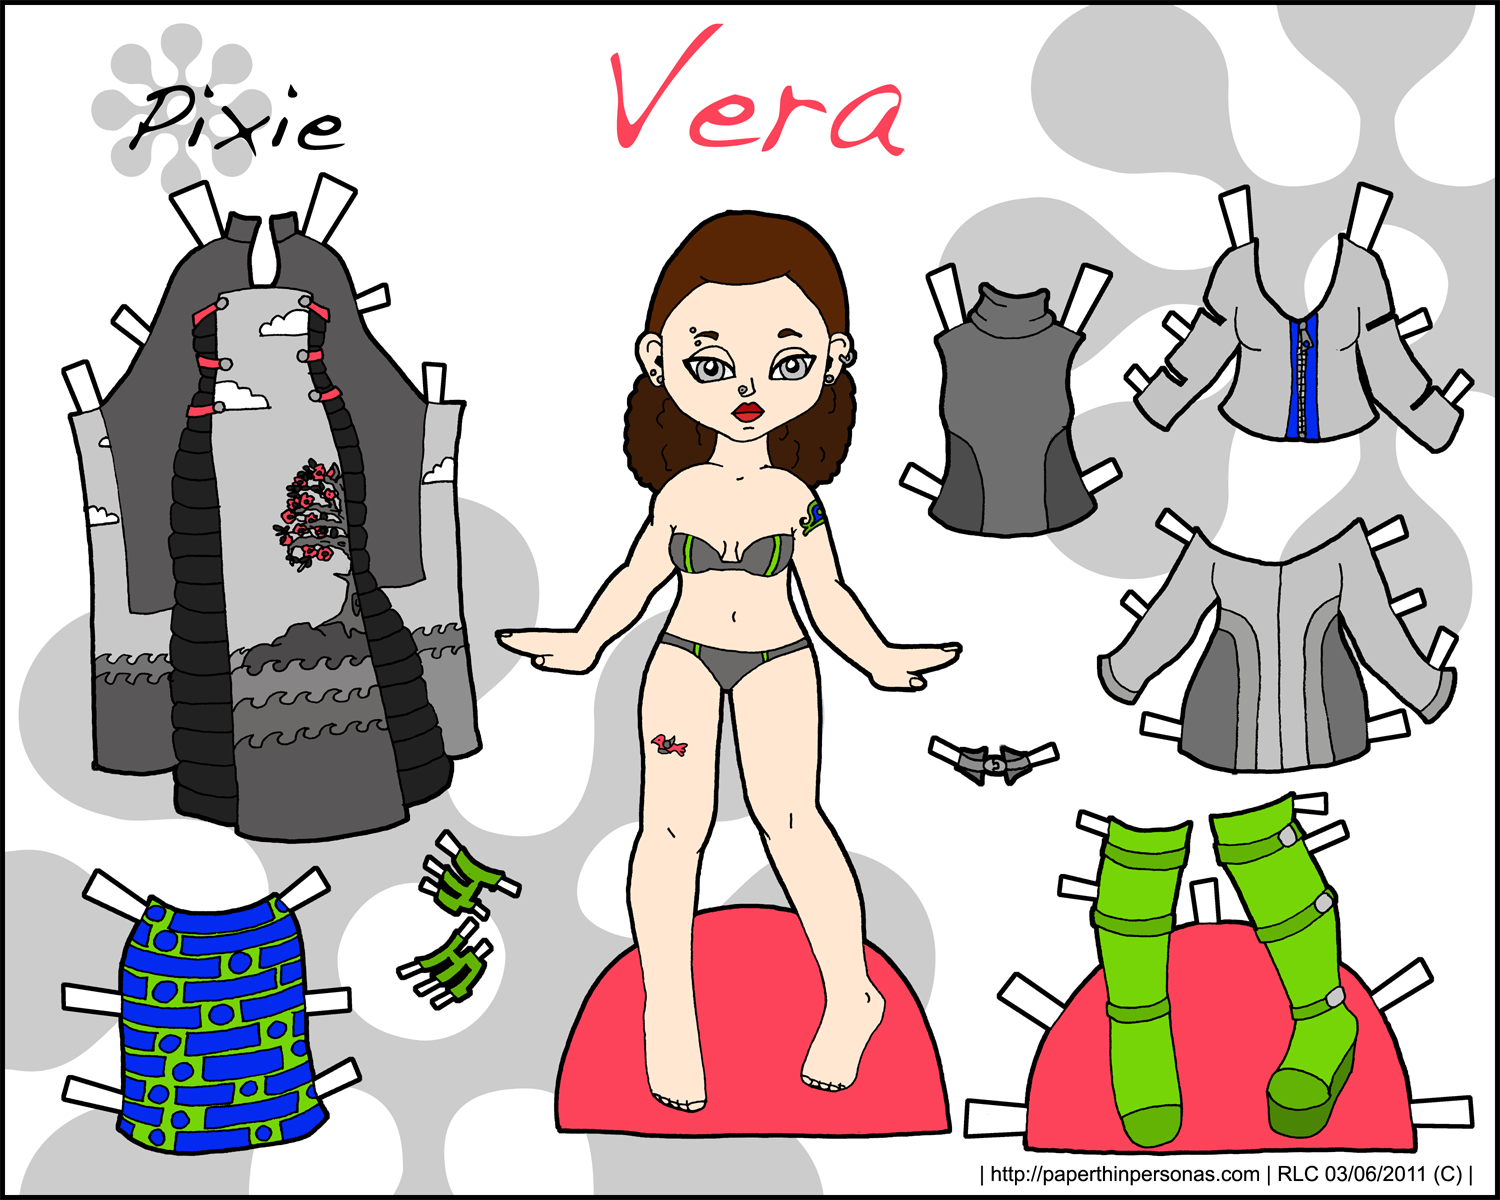 pixie-paper-dolls-vera-150